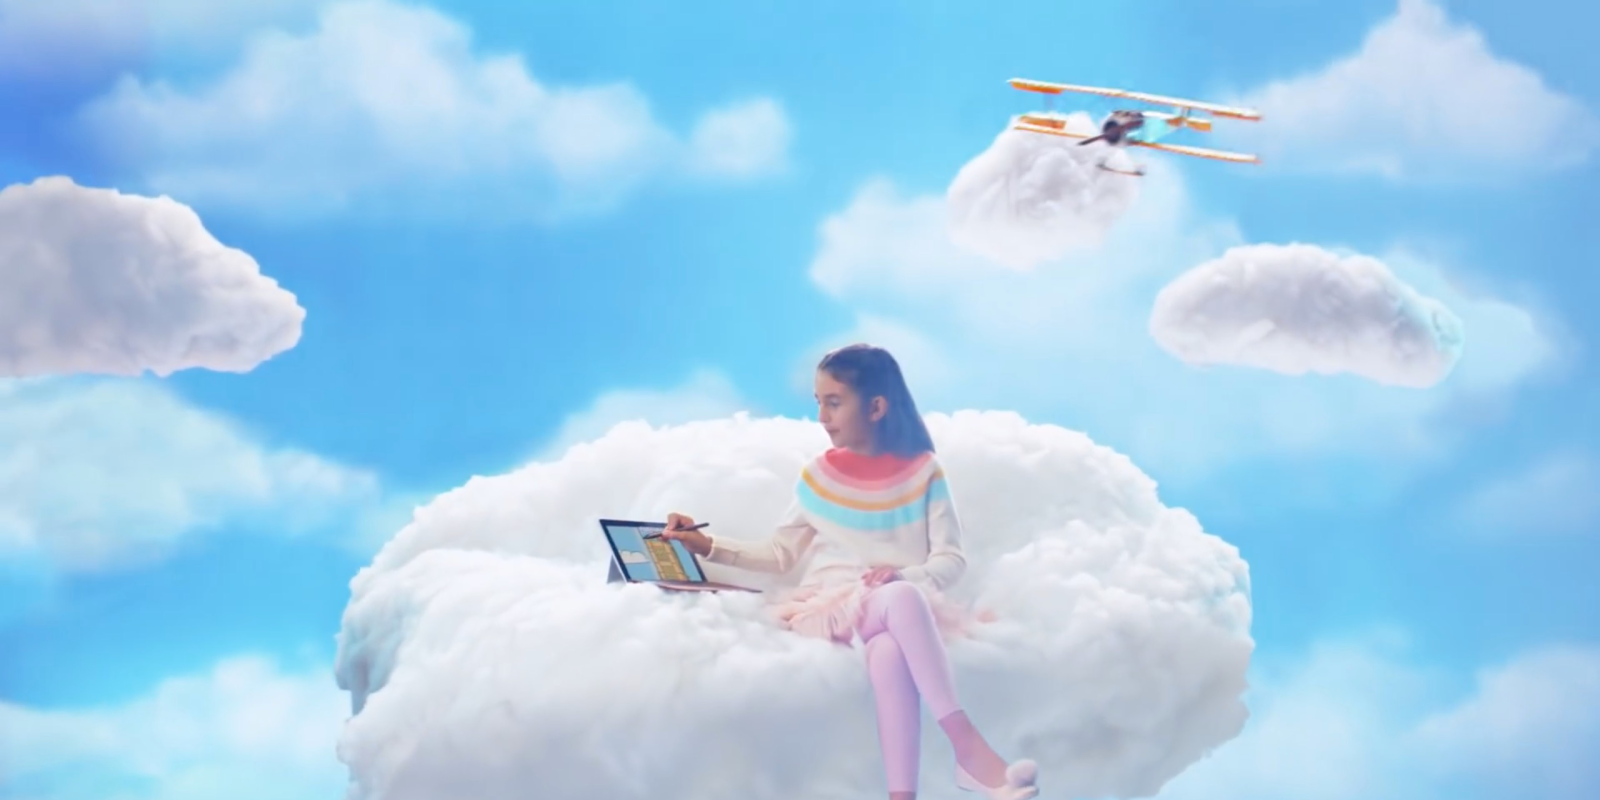 Fun Microsoft Surface holiday ad mocks the iPad: 'my dreams are big so ...